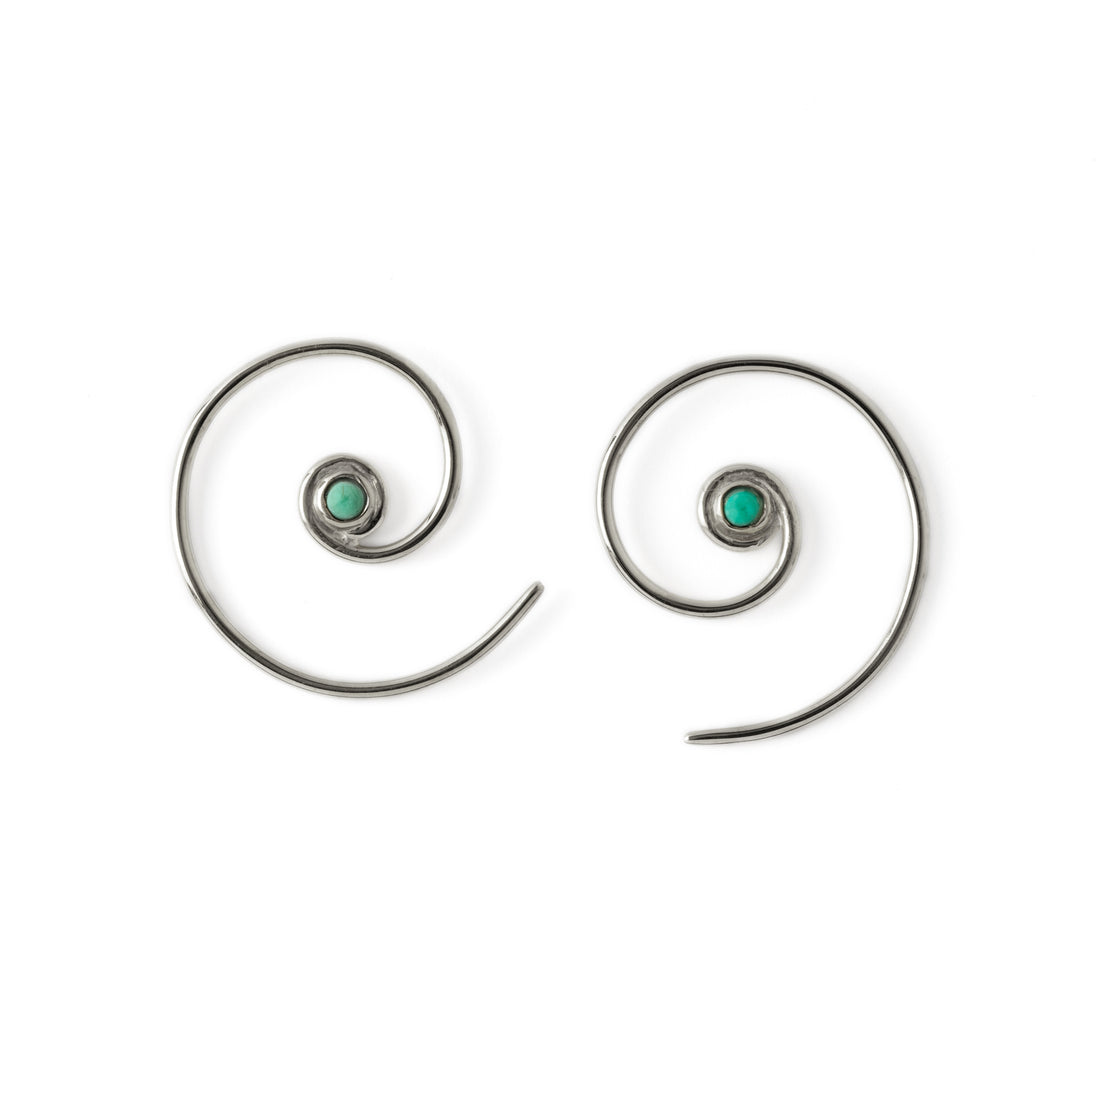 pair of Silver &amp; Turquoise Koru spiral earrings side view